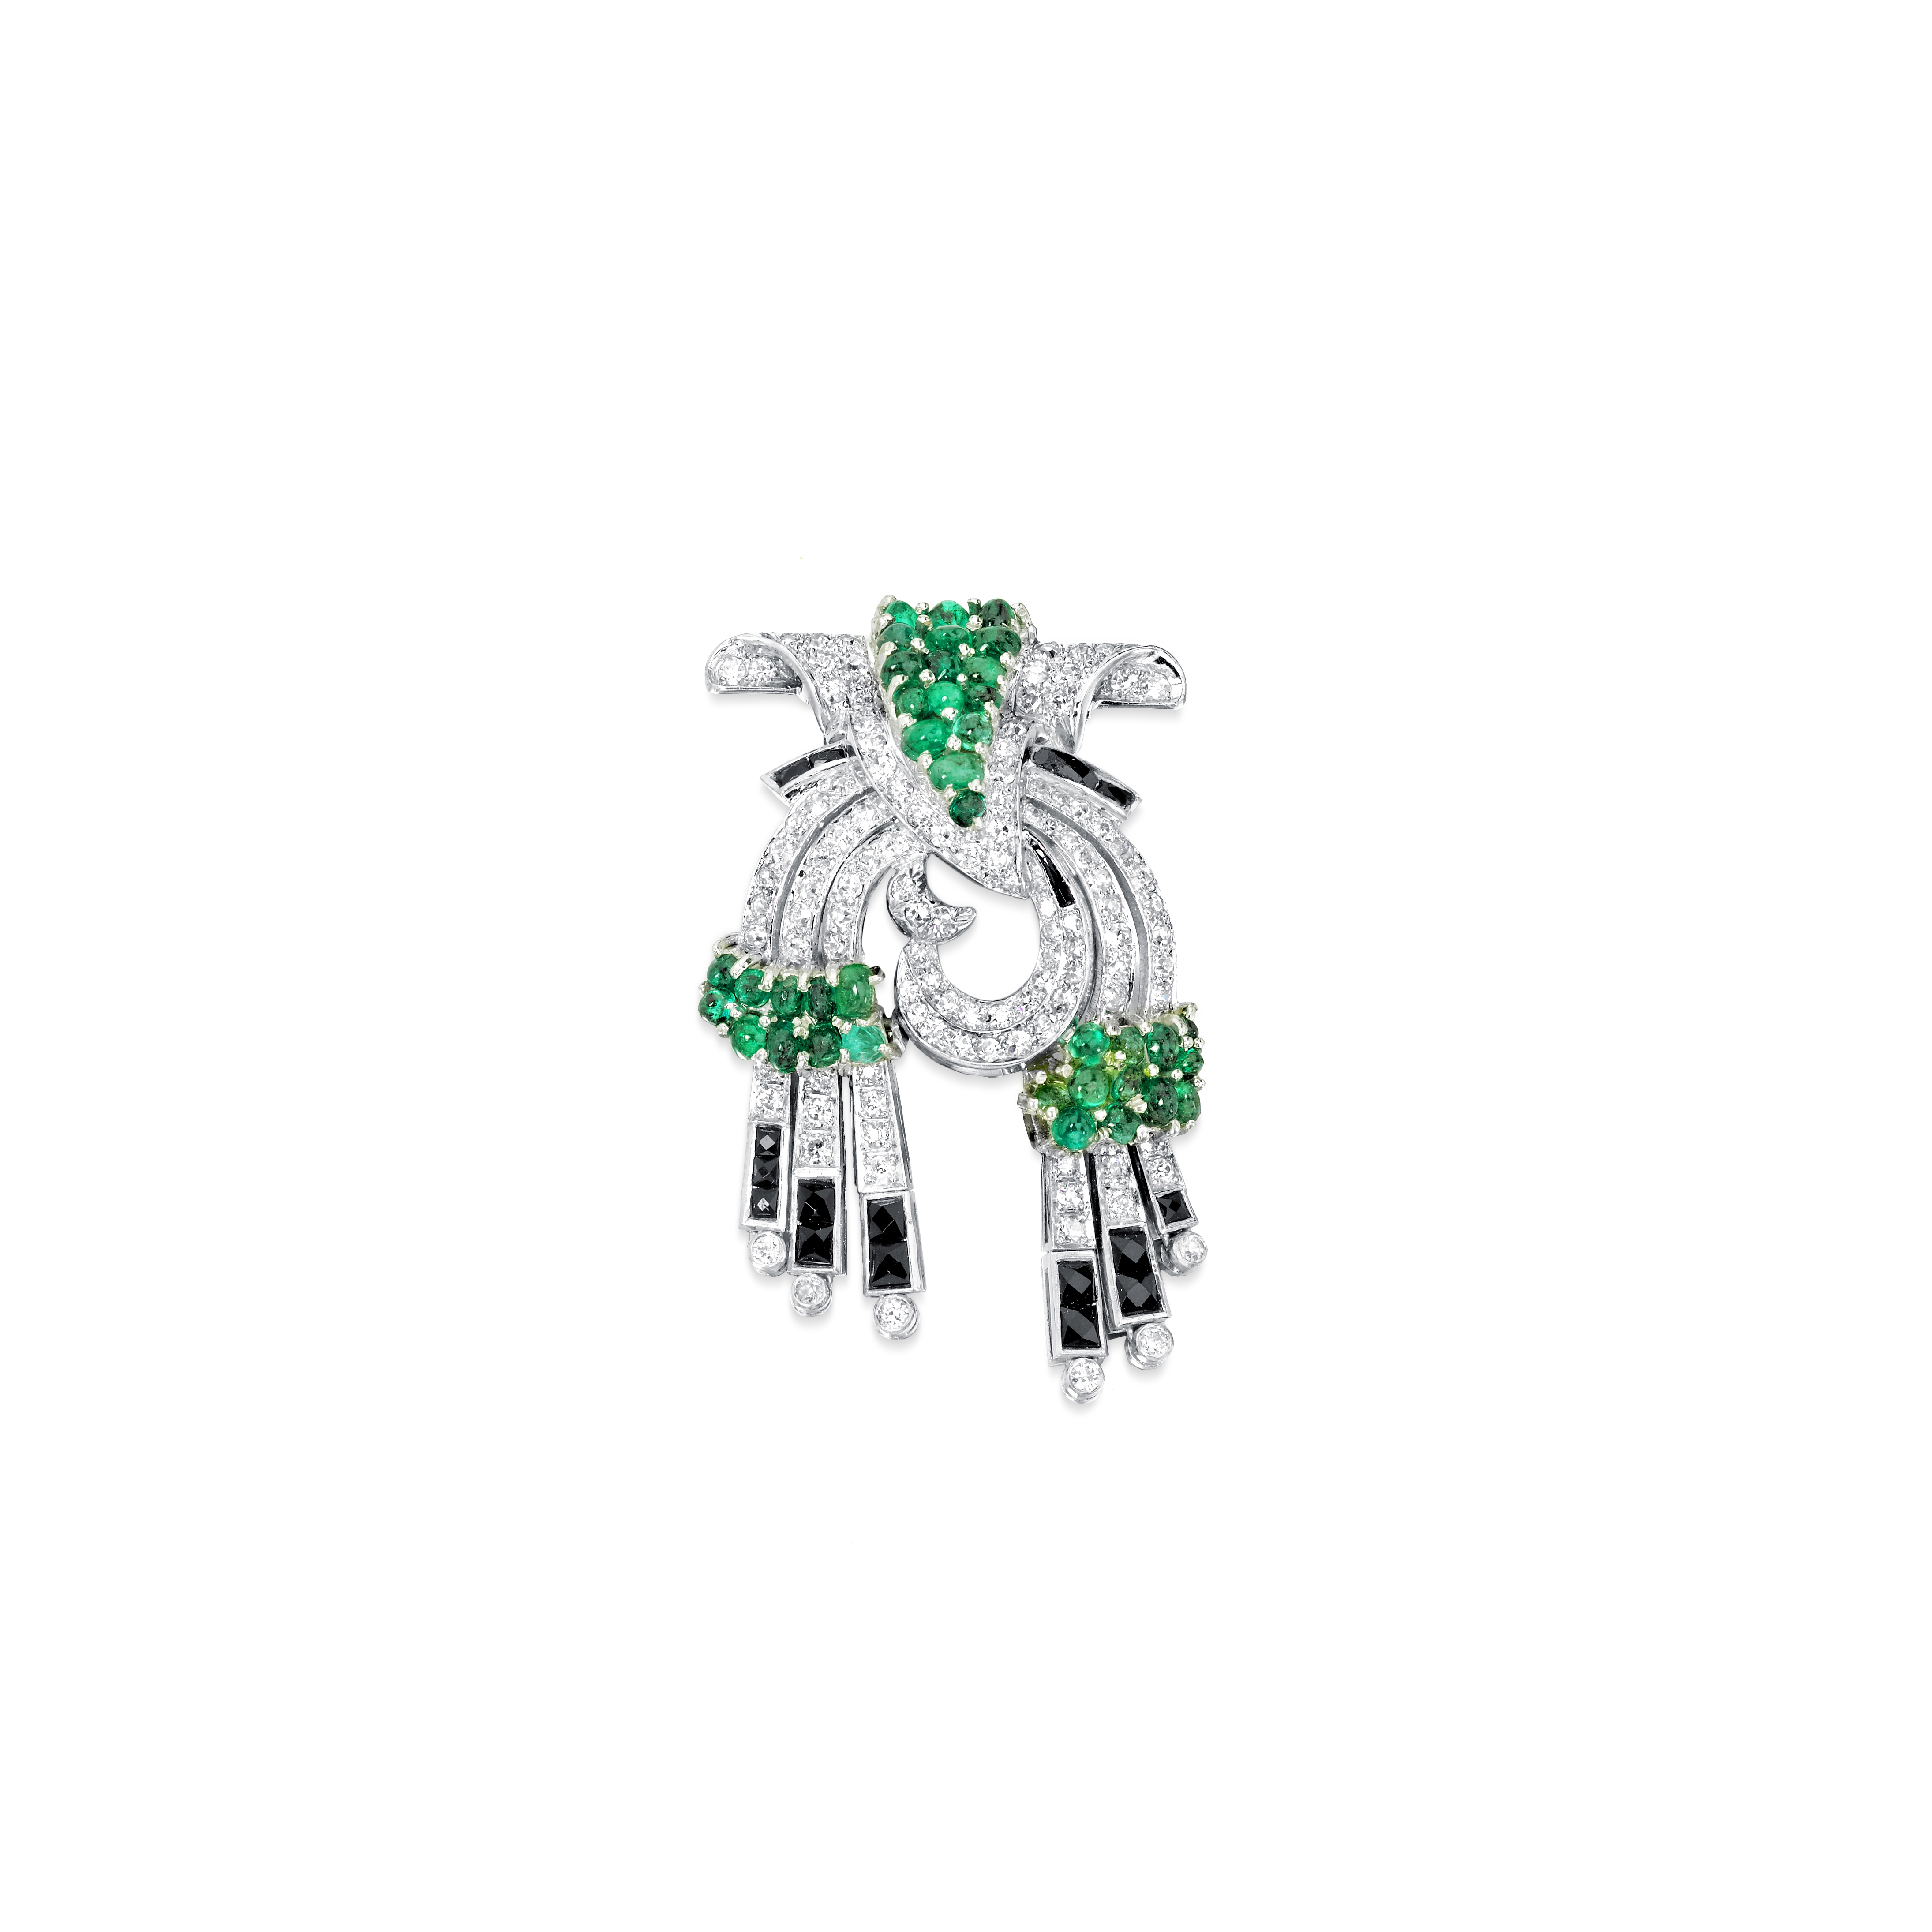 An emerald, diamond, and onyx brooch